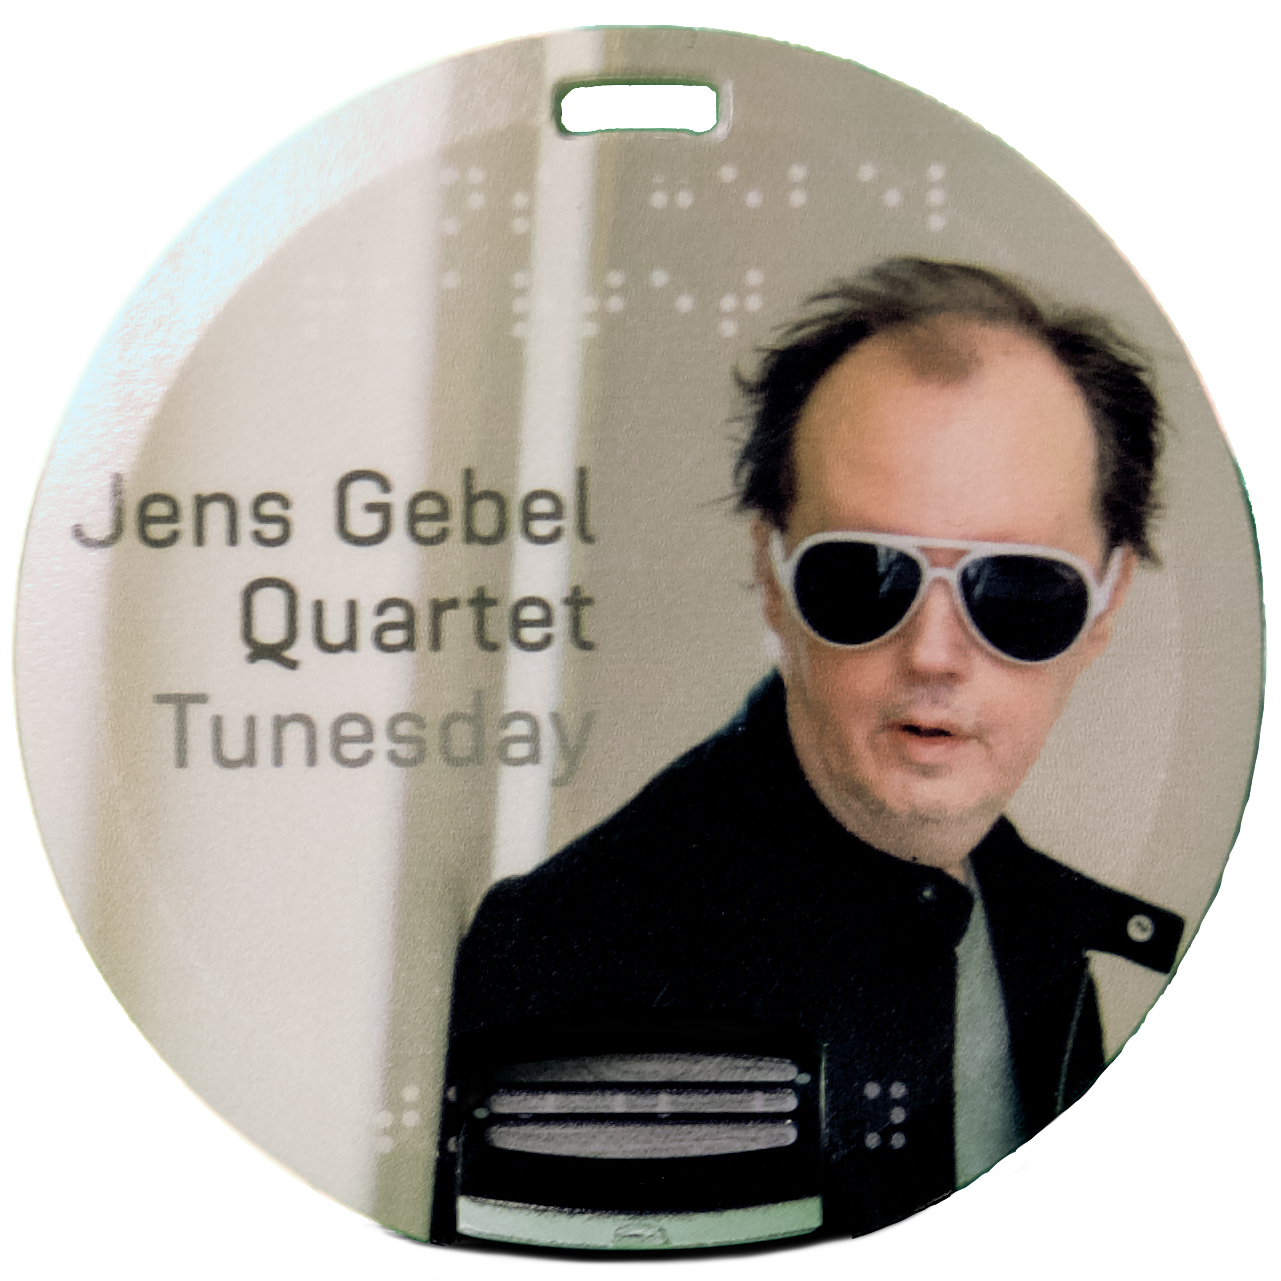 Tunesday / Jens Gebel Quartet